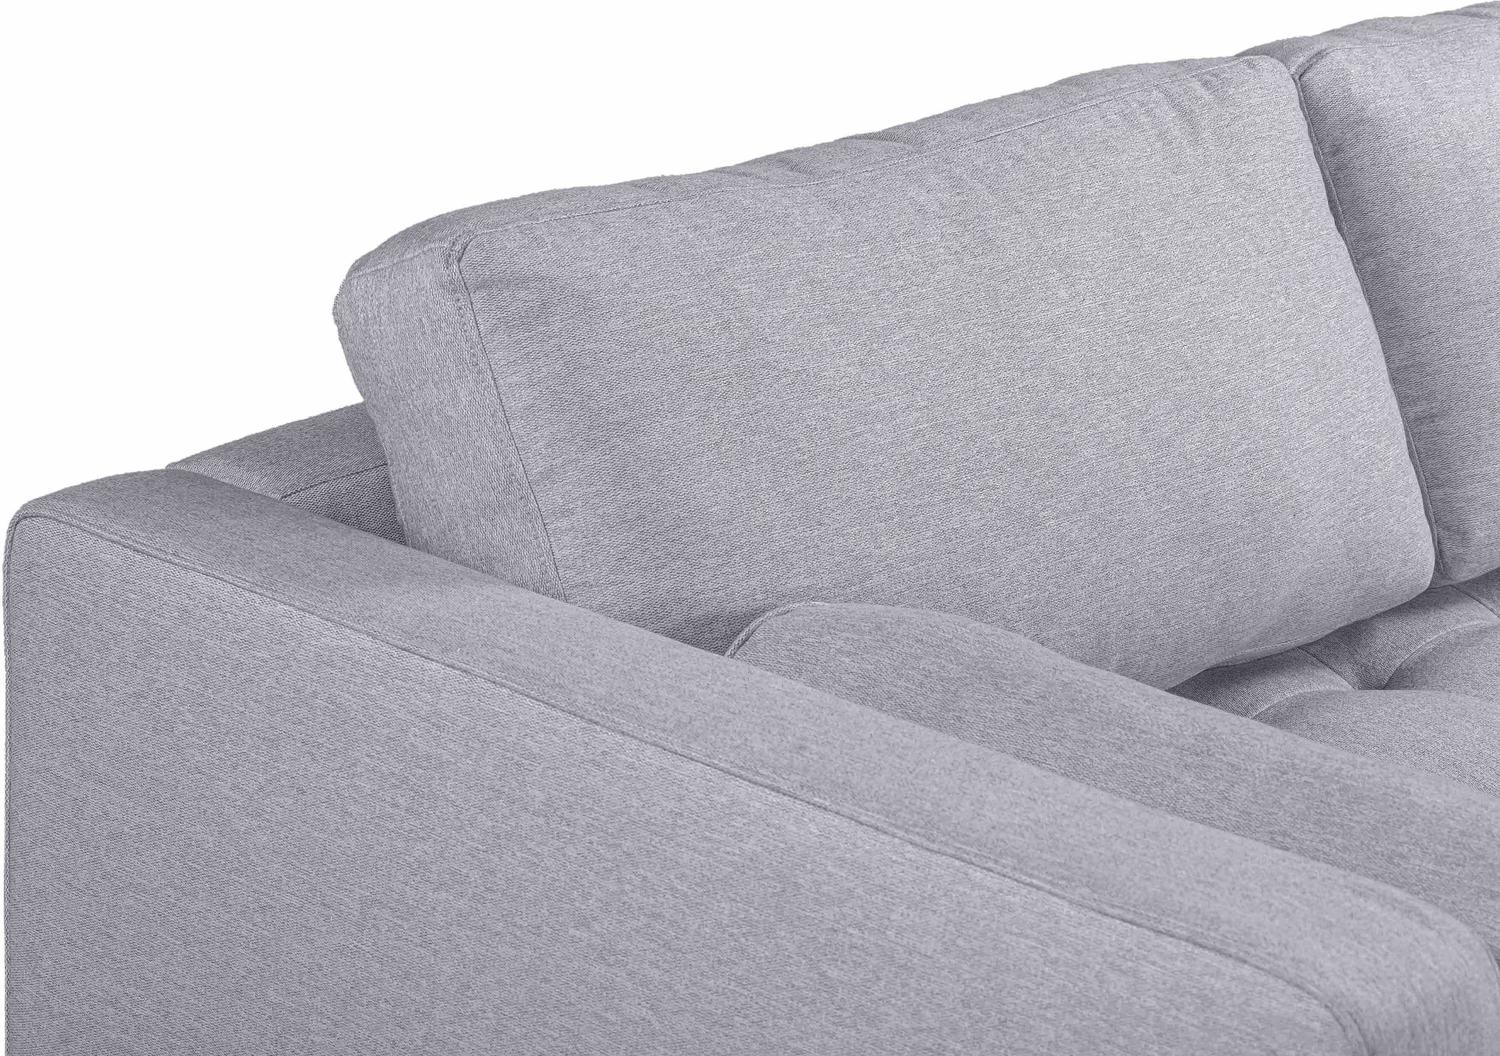 chaise loveseat sofa Tov Furniture Sofas Grey